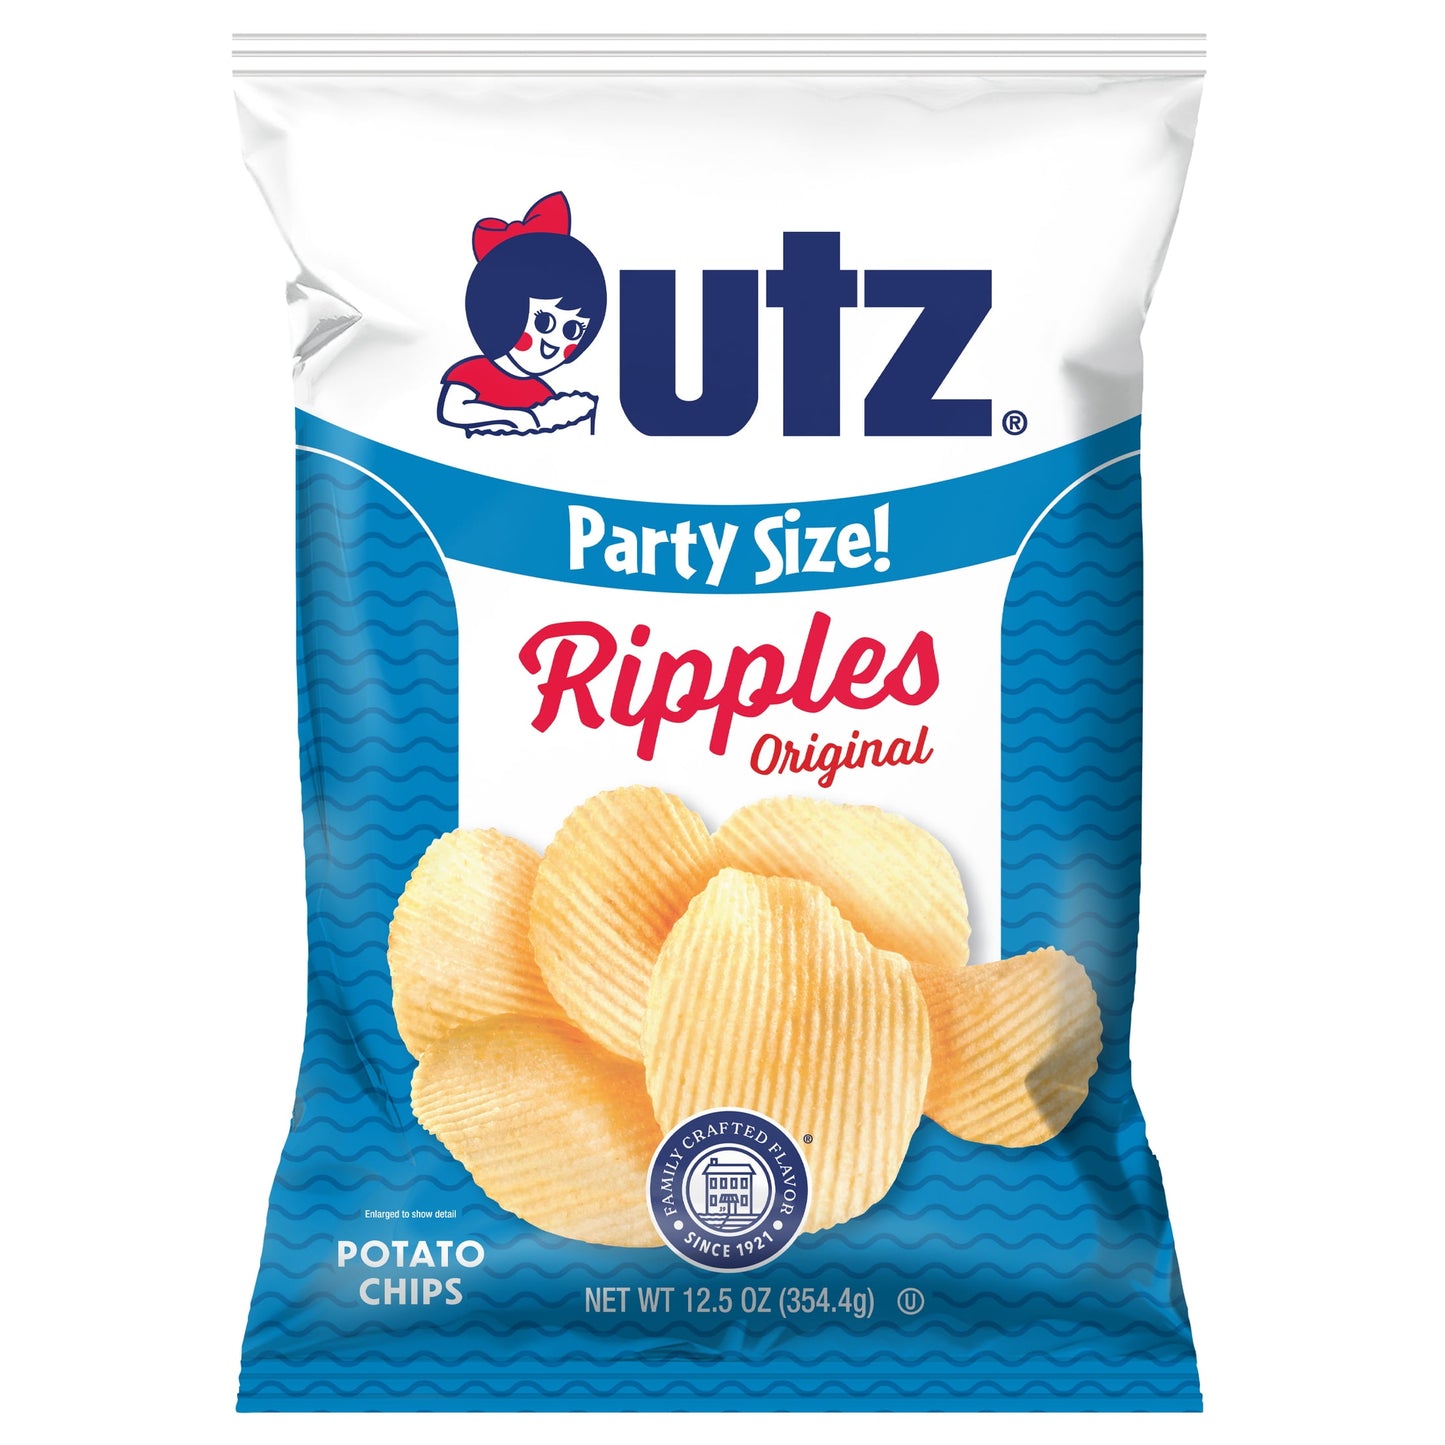 Ripples Original Potato Chips, Gluten-Free, Party Size, 12.5 Oz Bag